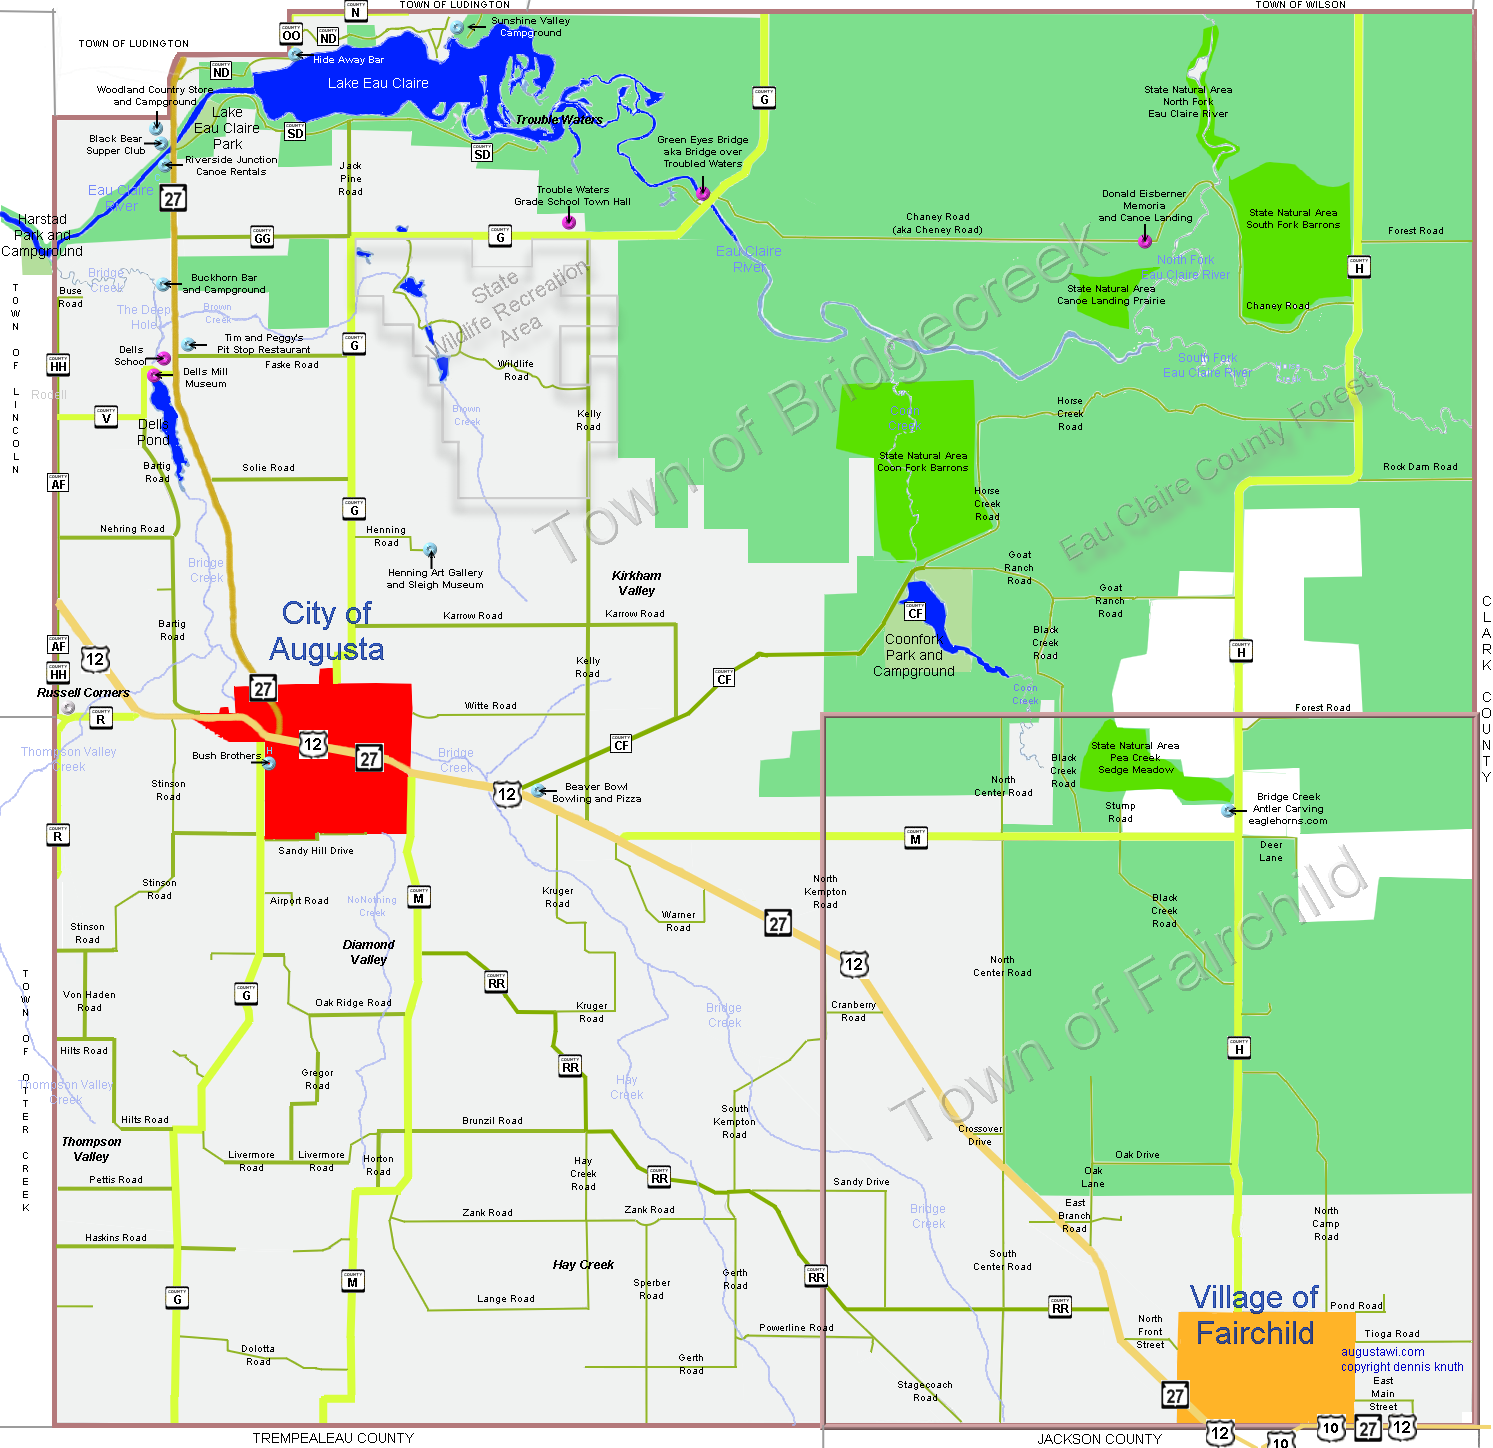 Map of Bridgecreek and Fairchild Townships